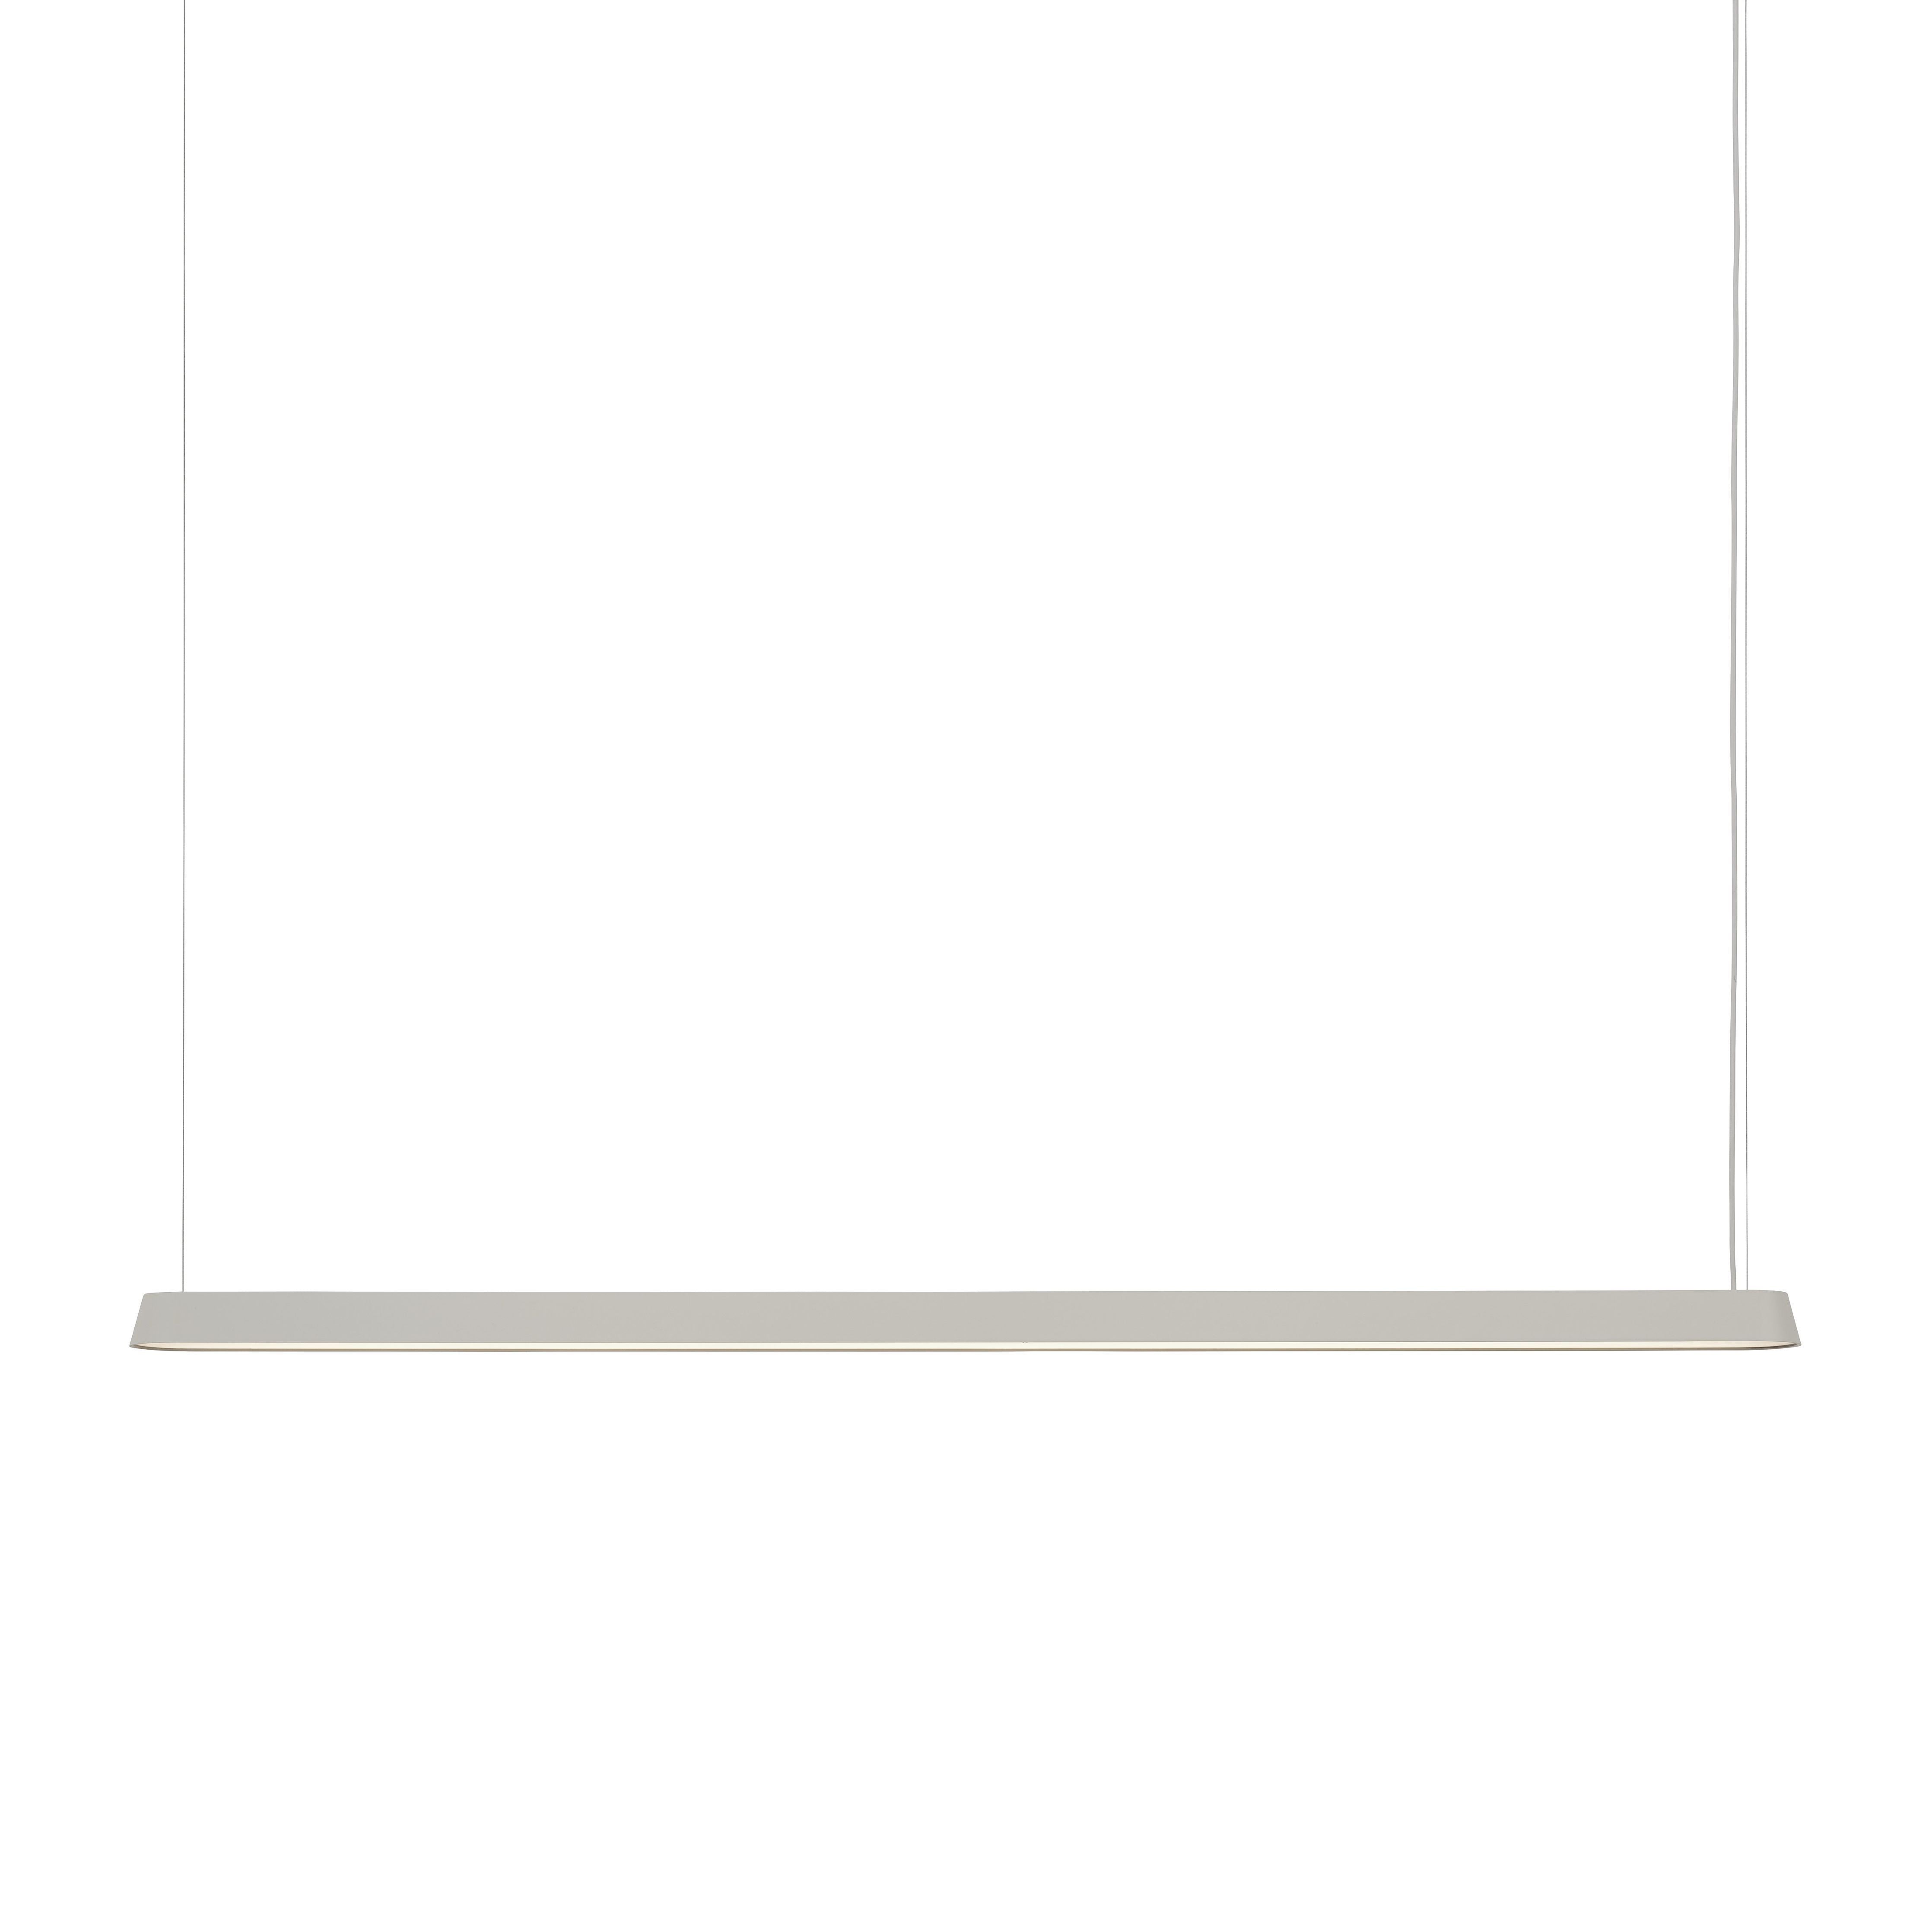 Lâmpada de suspensão linear Muuto 169 cm, cinza